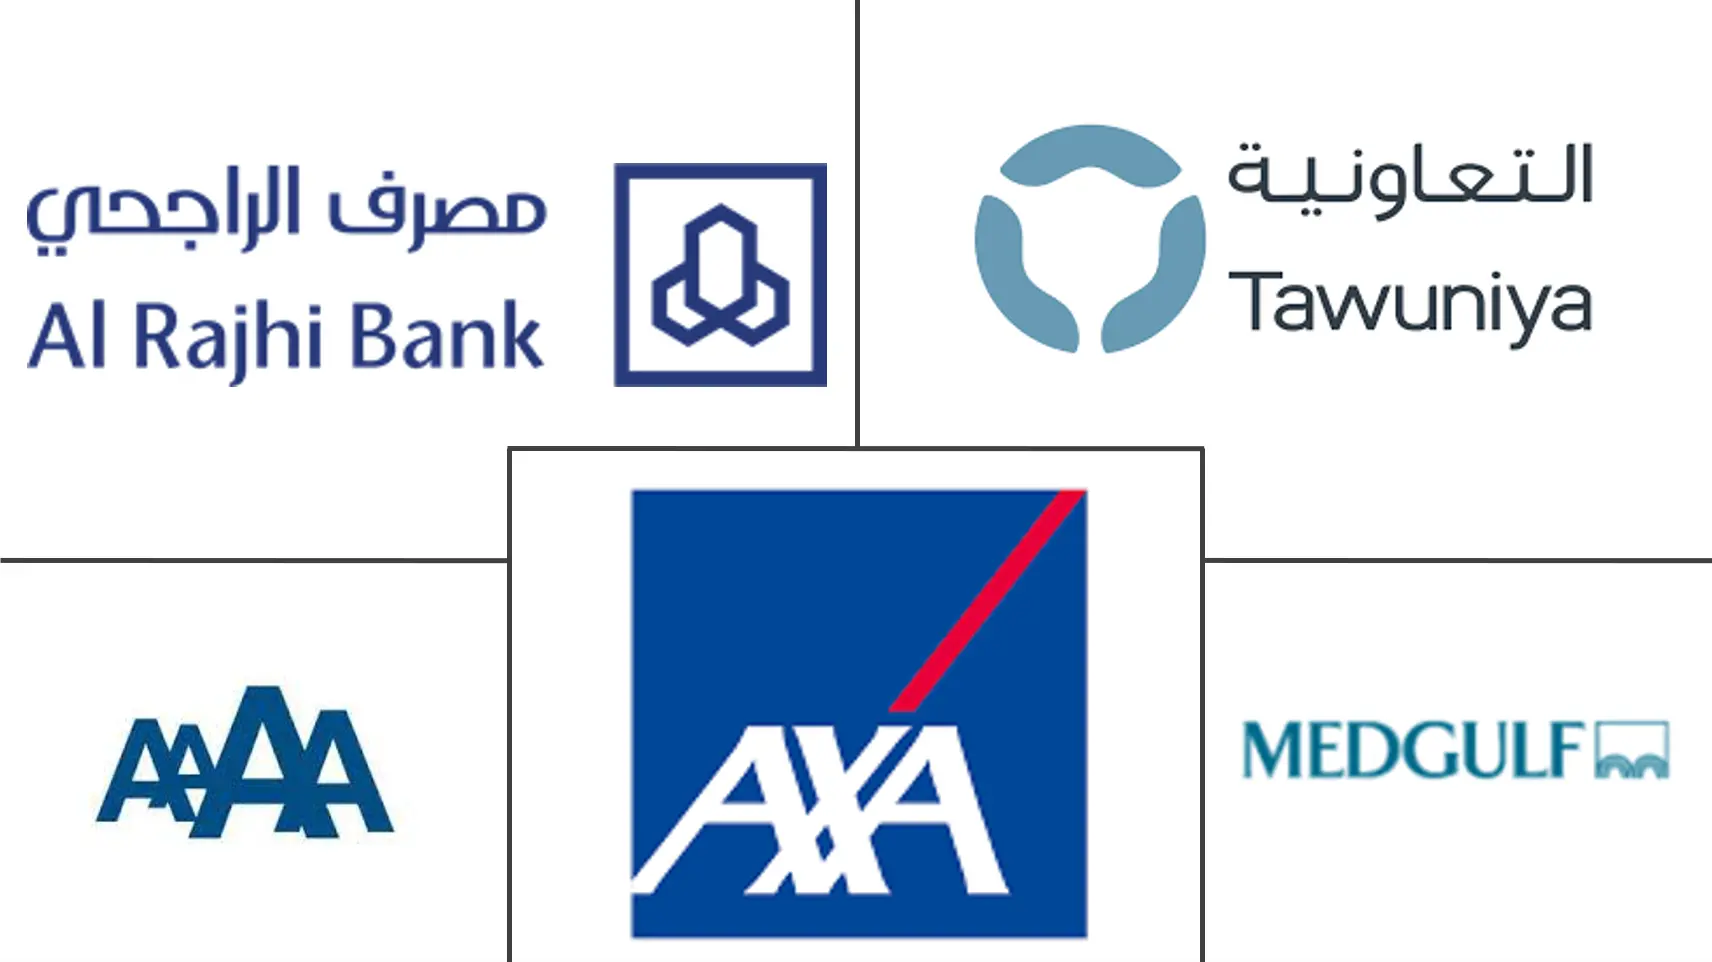 Hauptakteure des Kfz-Versicherungsmarktes in Saudi-Arabien